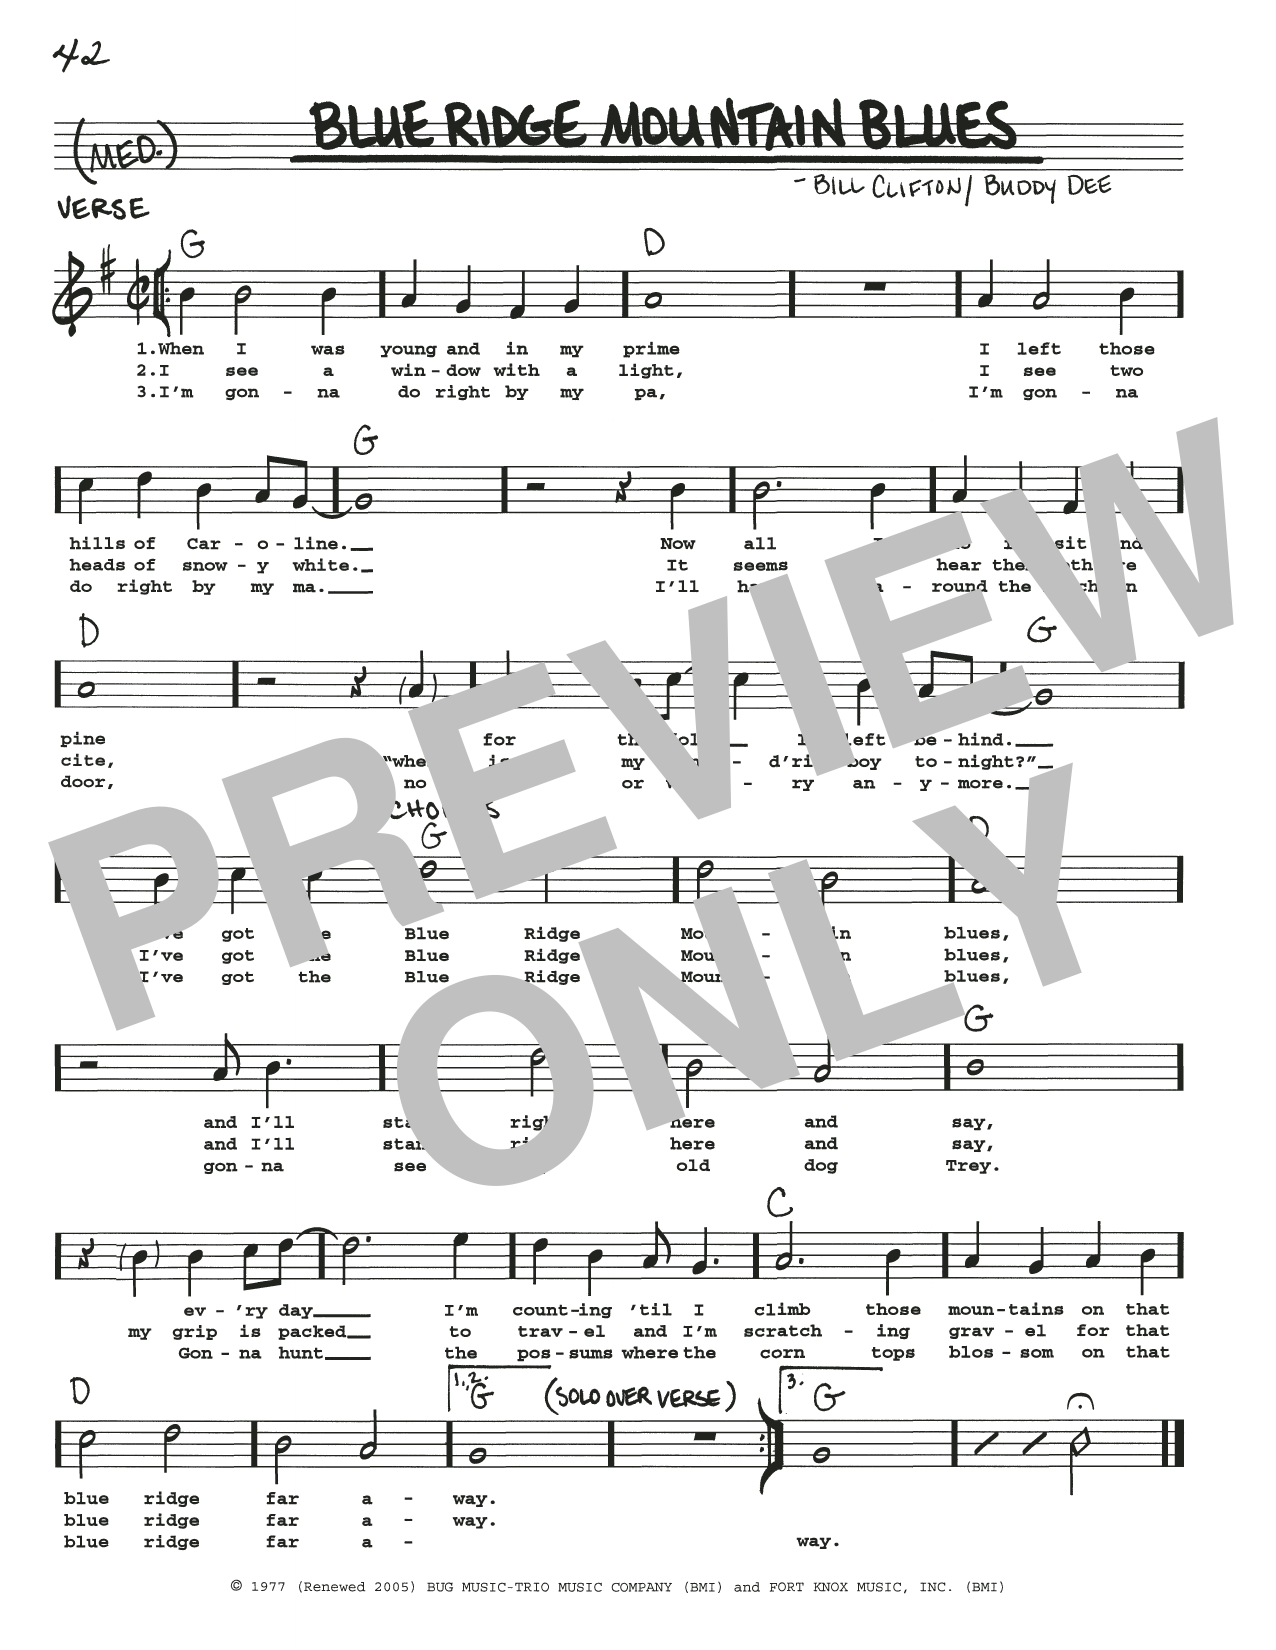 Bill Clifton Blue Ridge Mountain Blues Sheet Music Notes & Chords for Real Book – Melody, Lyrics & Chords - Download or Print PDF